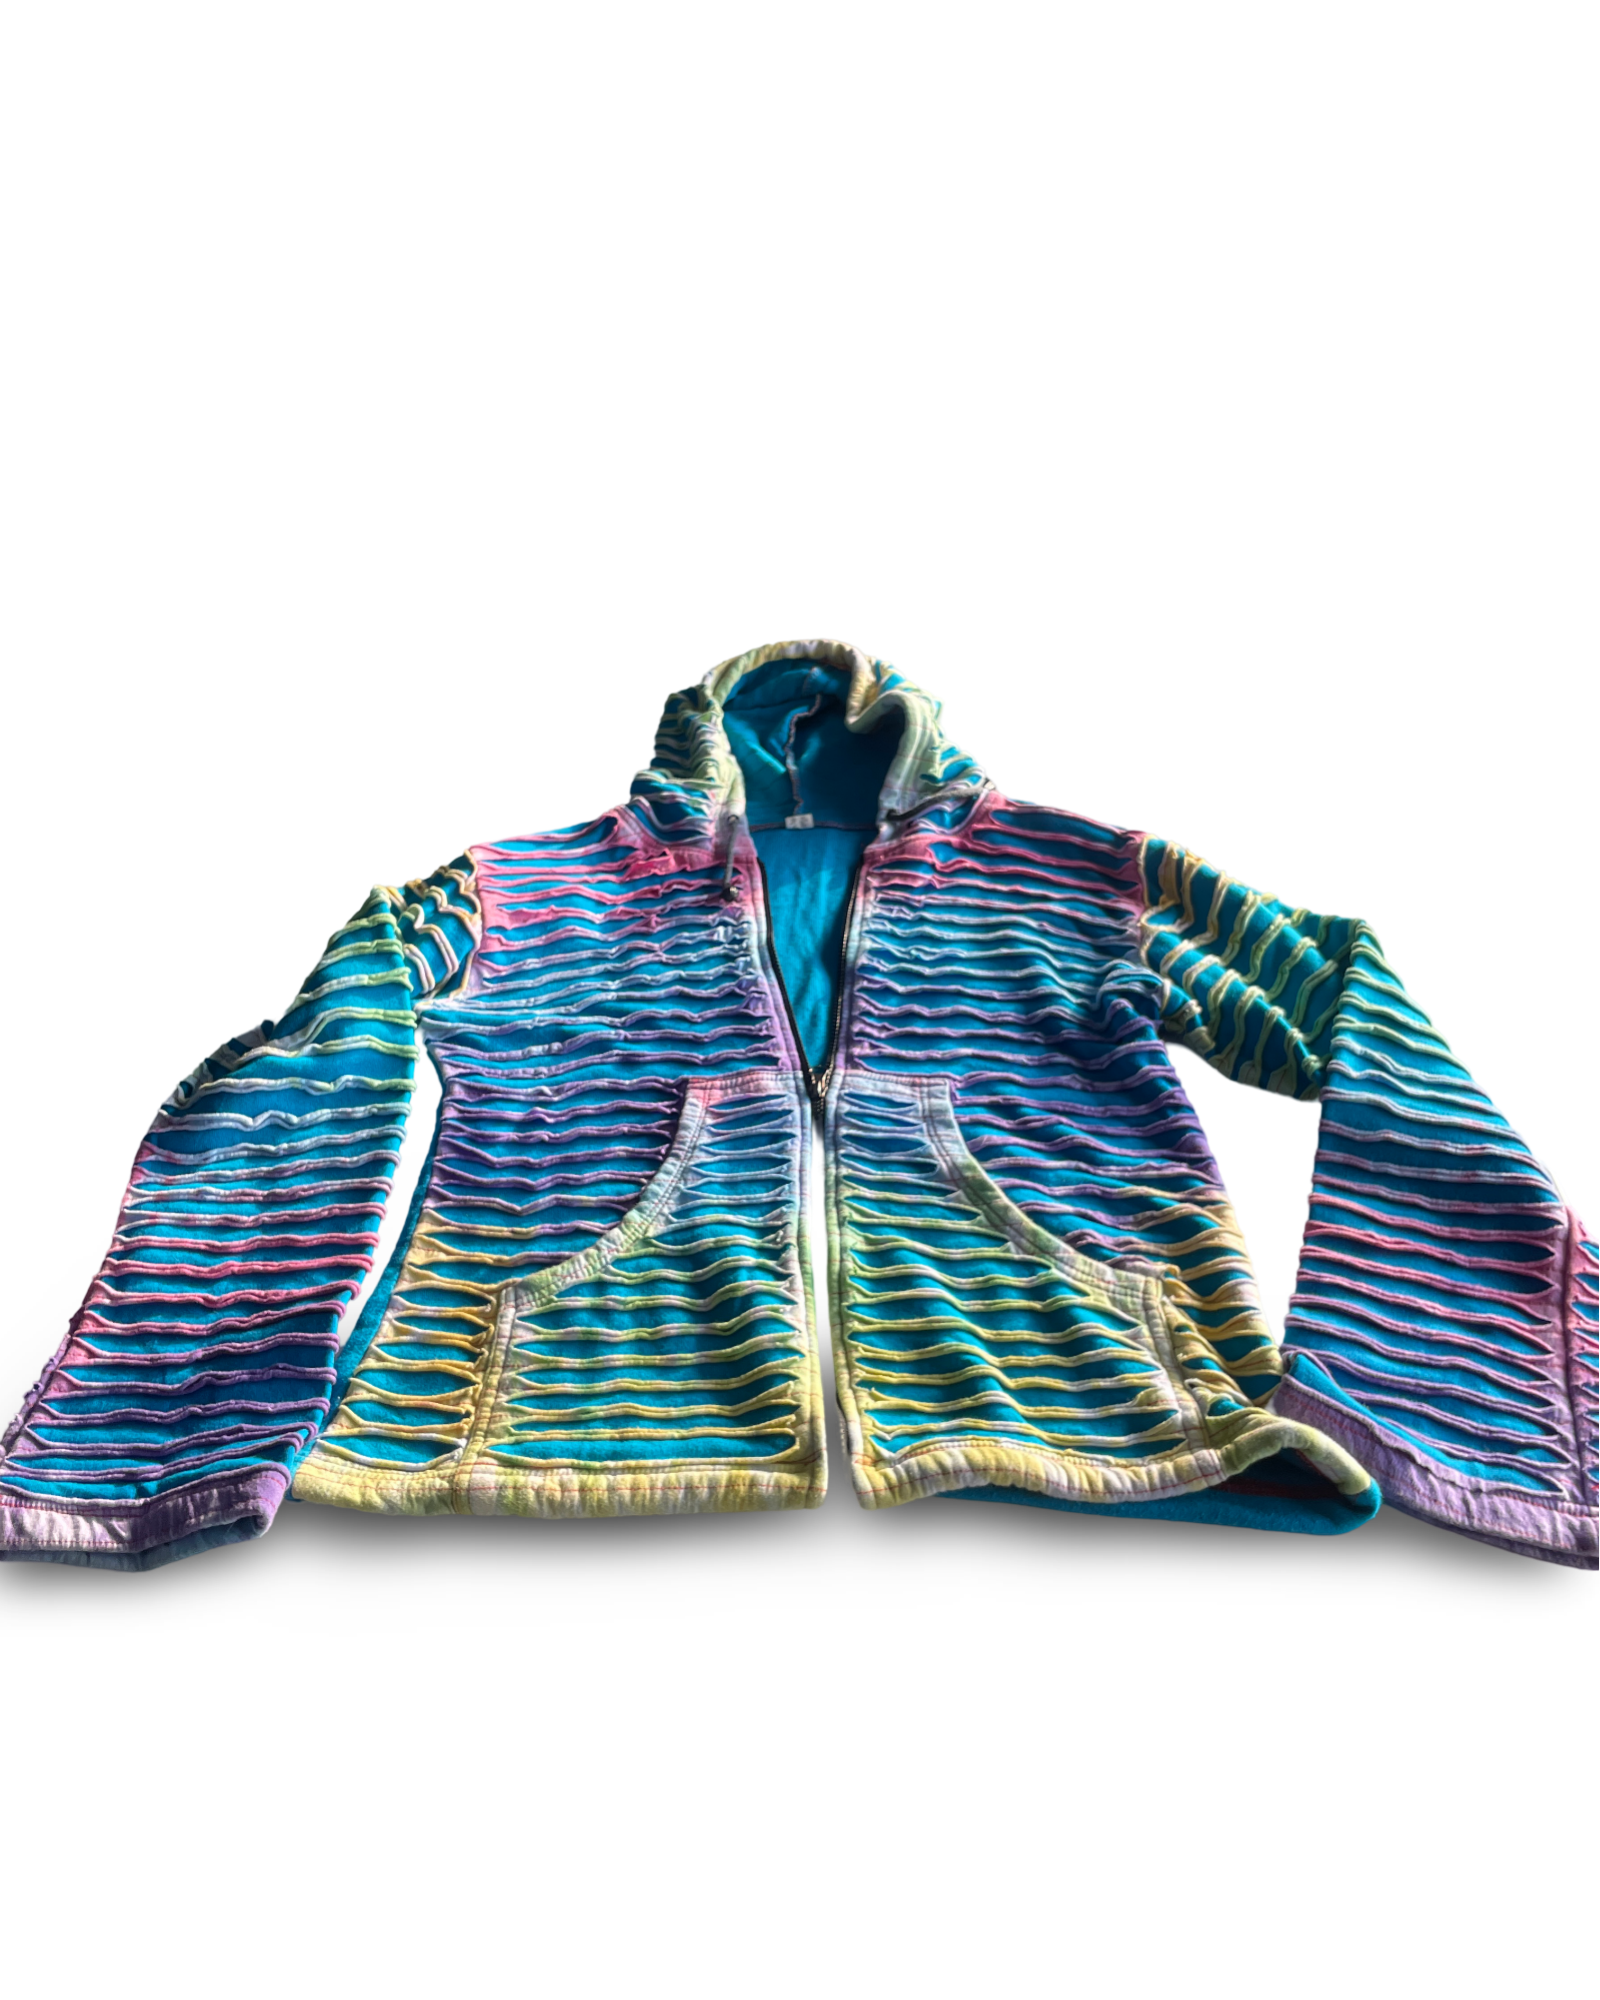 Vintage Women's Rainbow Boho Hippie Hoodie Jacket - Size M (SKU 4604)